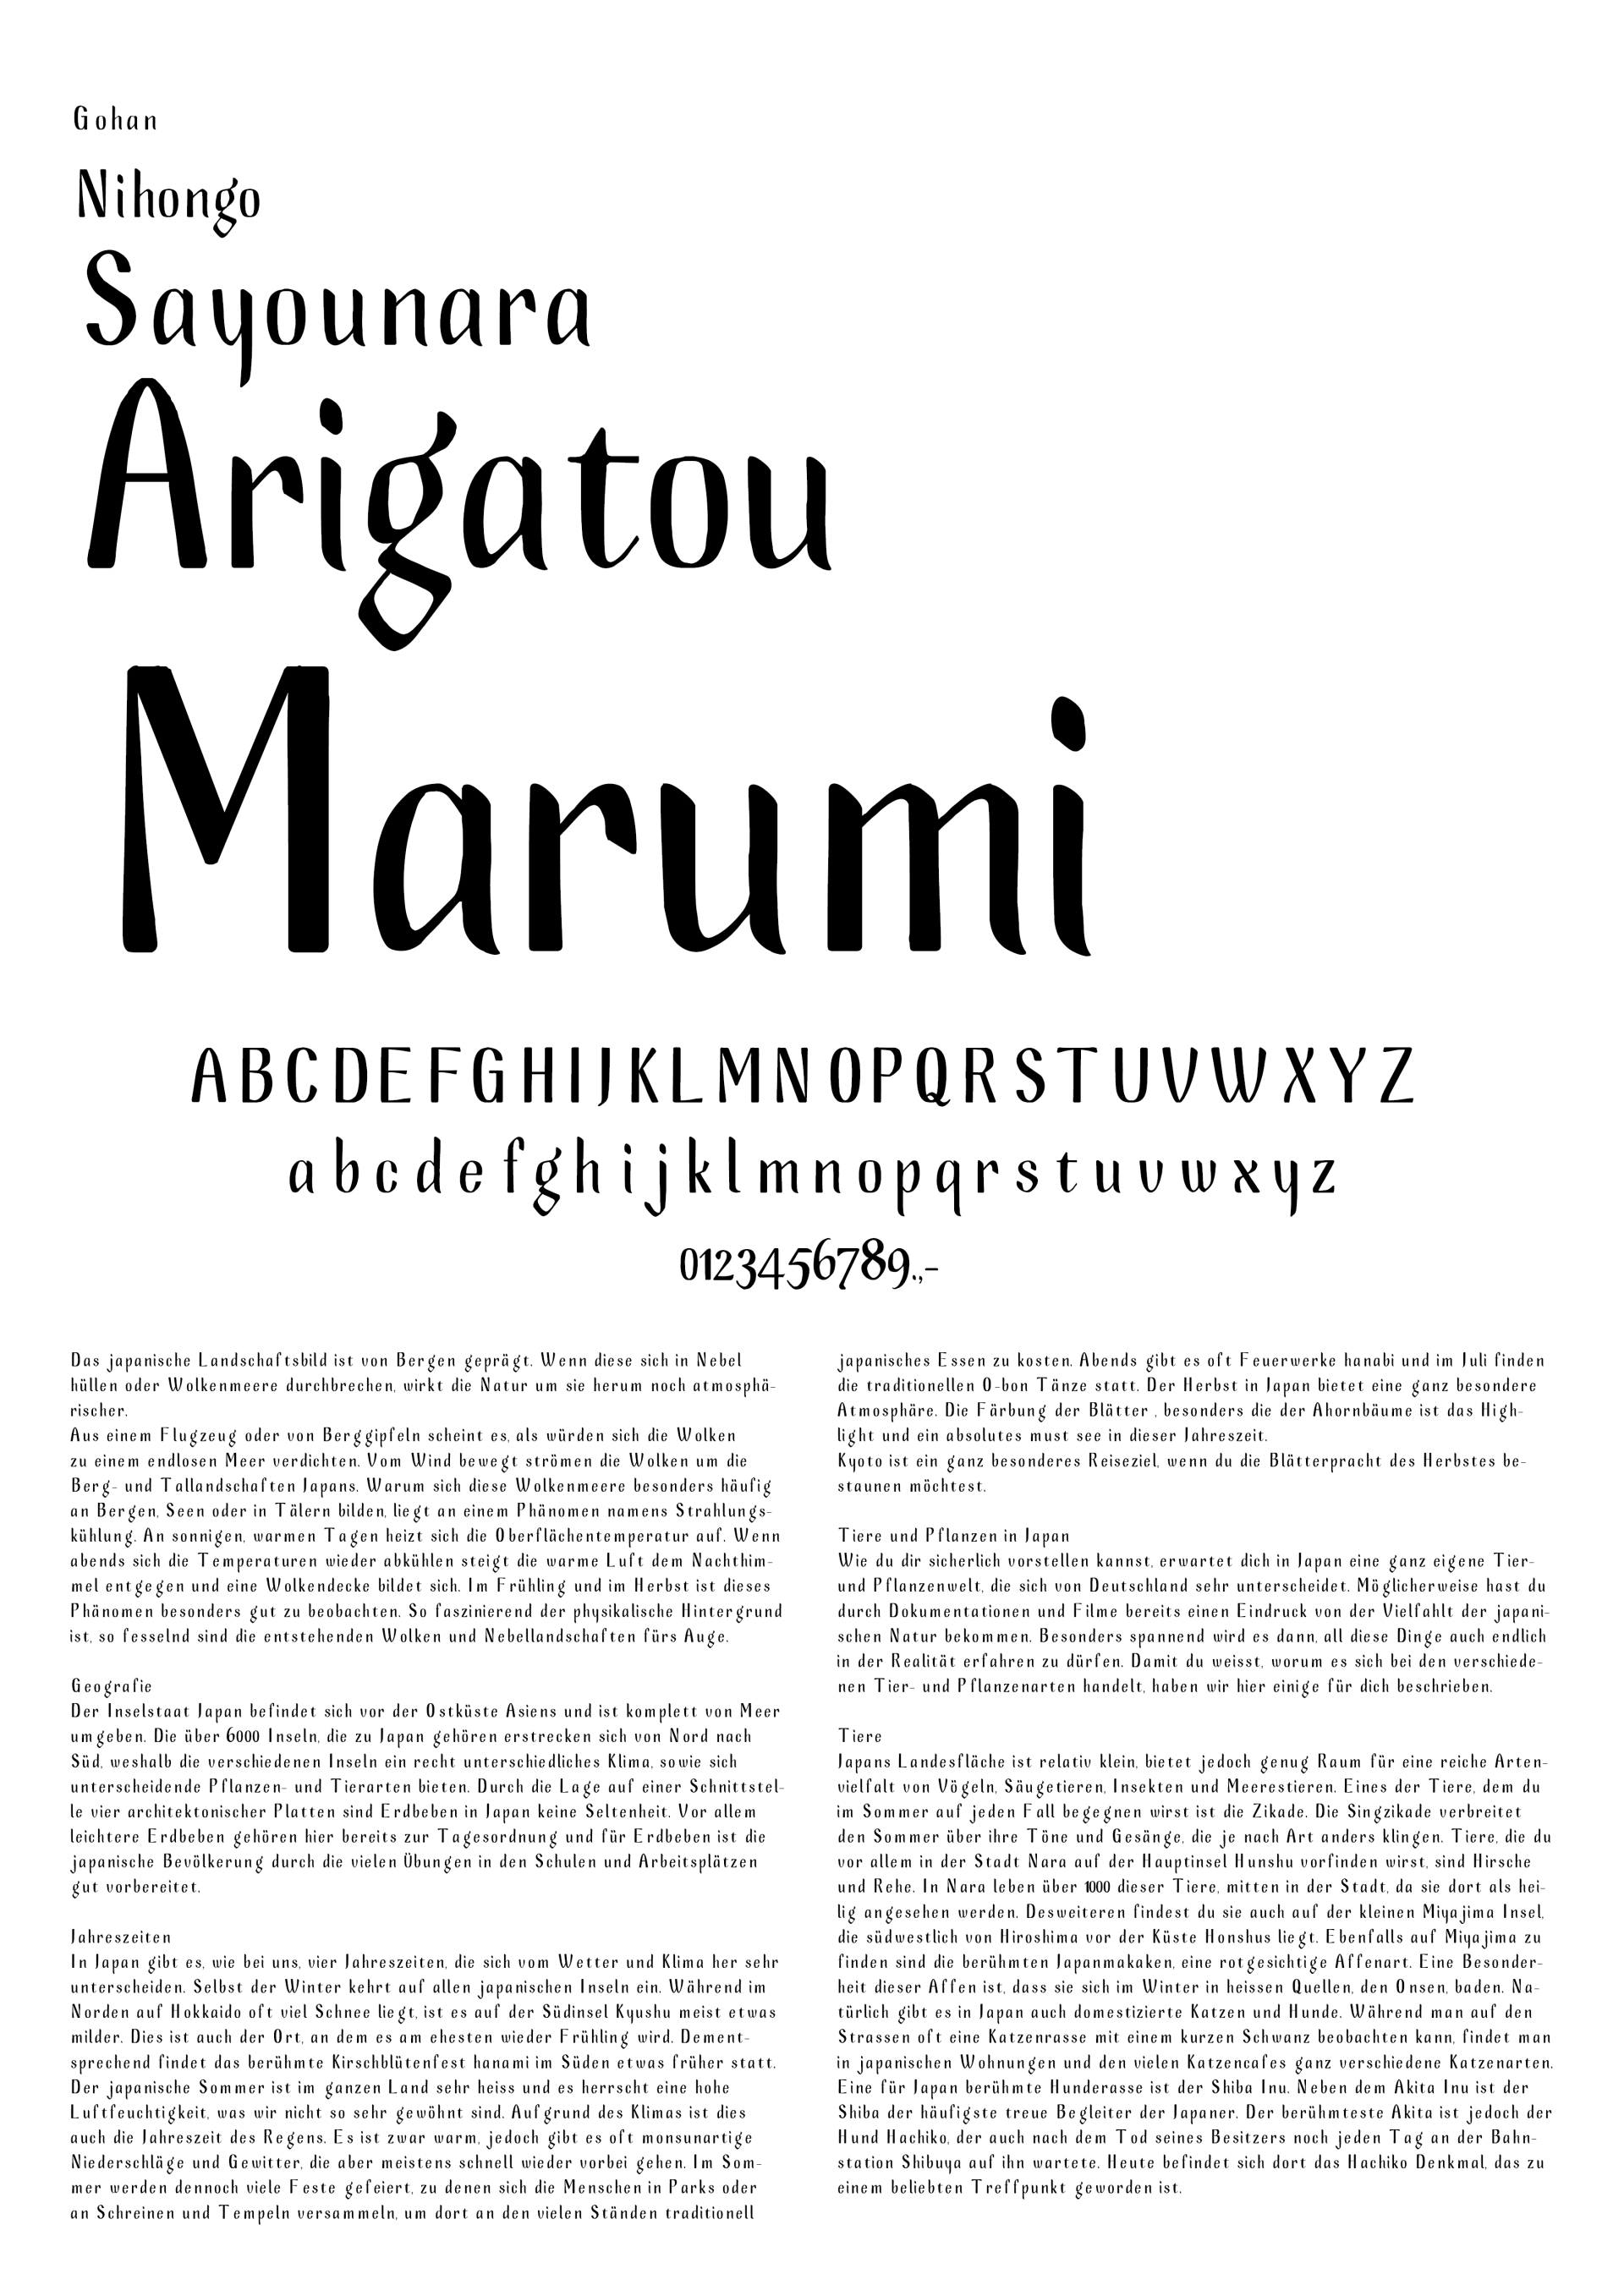 Mariella Fahr Typografie Marumi